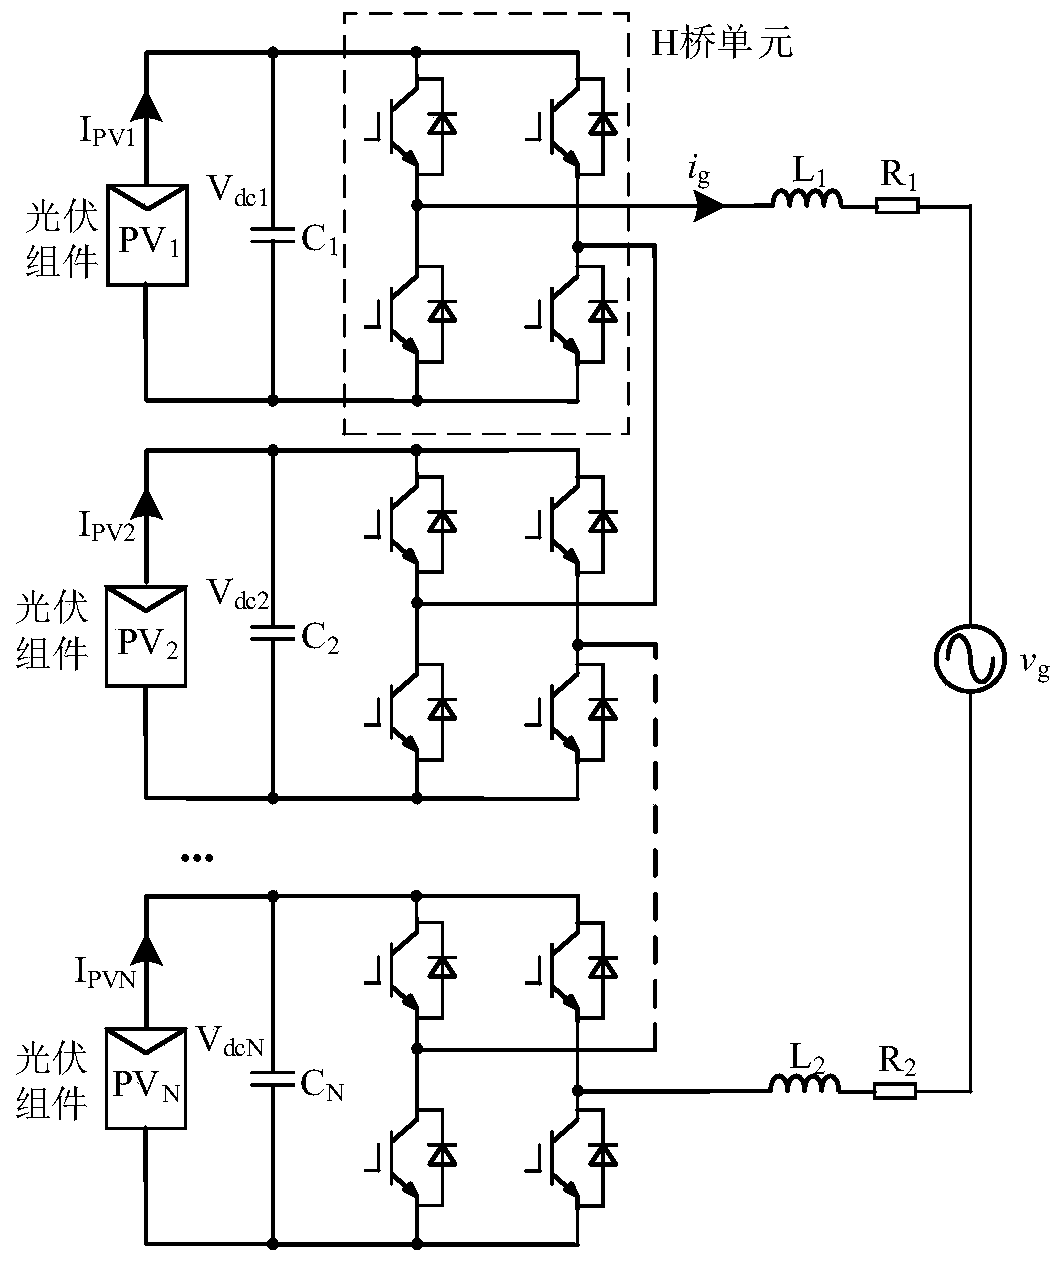 Control method for expanding operating range of cascaded H-bridge photovoltaic inverter